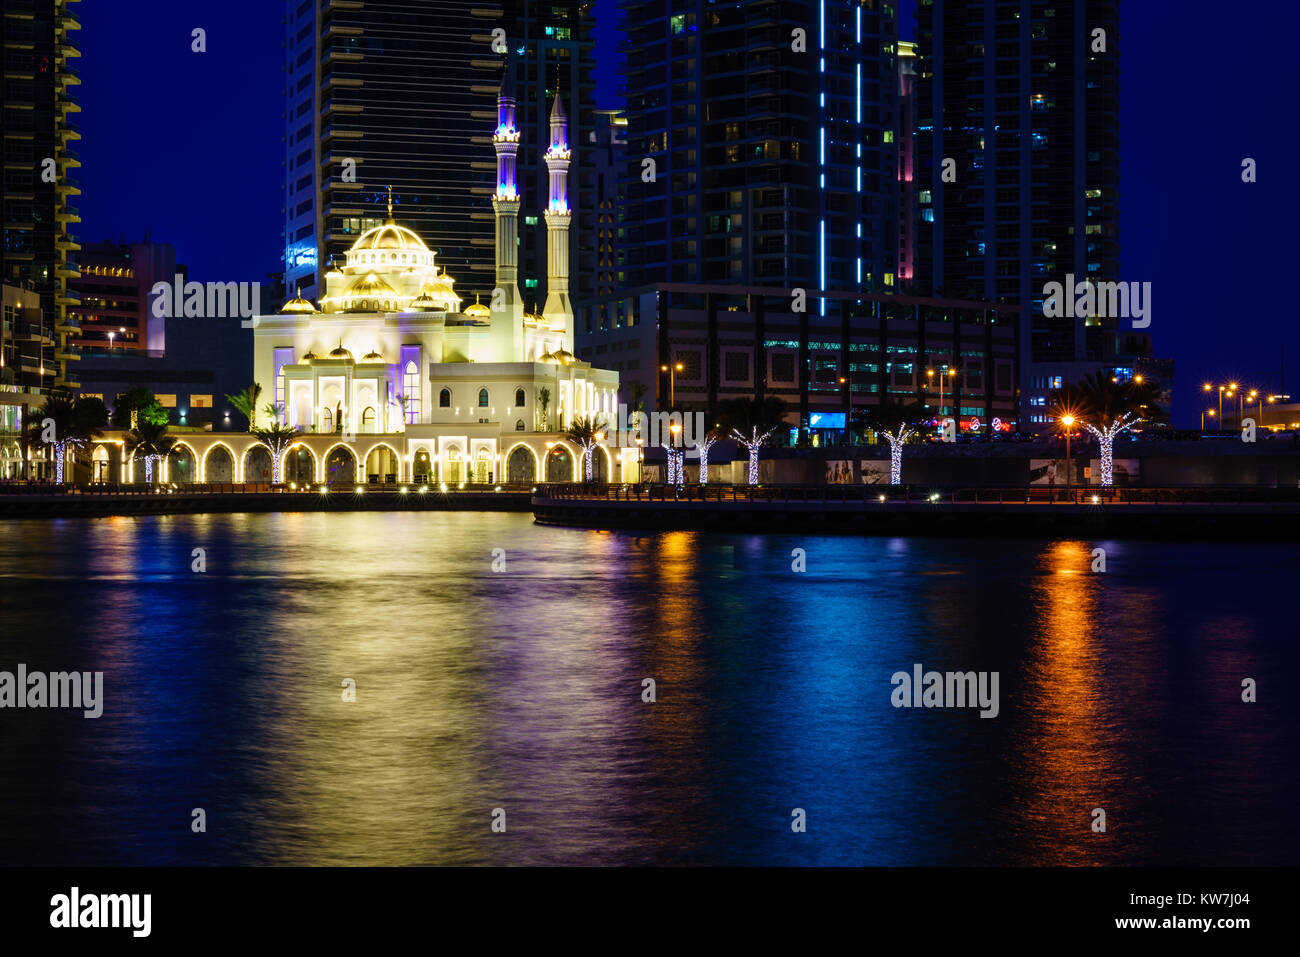 Mohammed Bin Ahmed Almulla Mosque in Dubai Marina at night Stock Photo